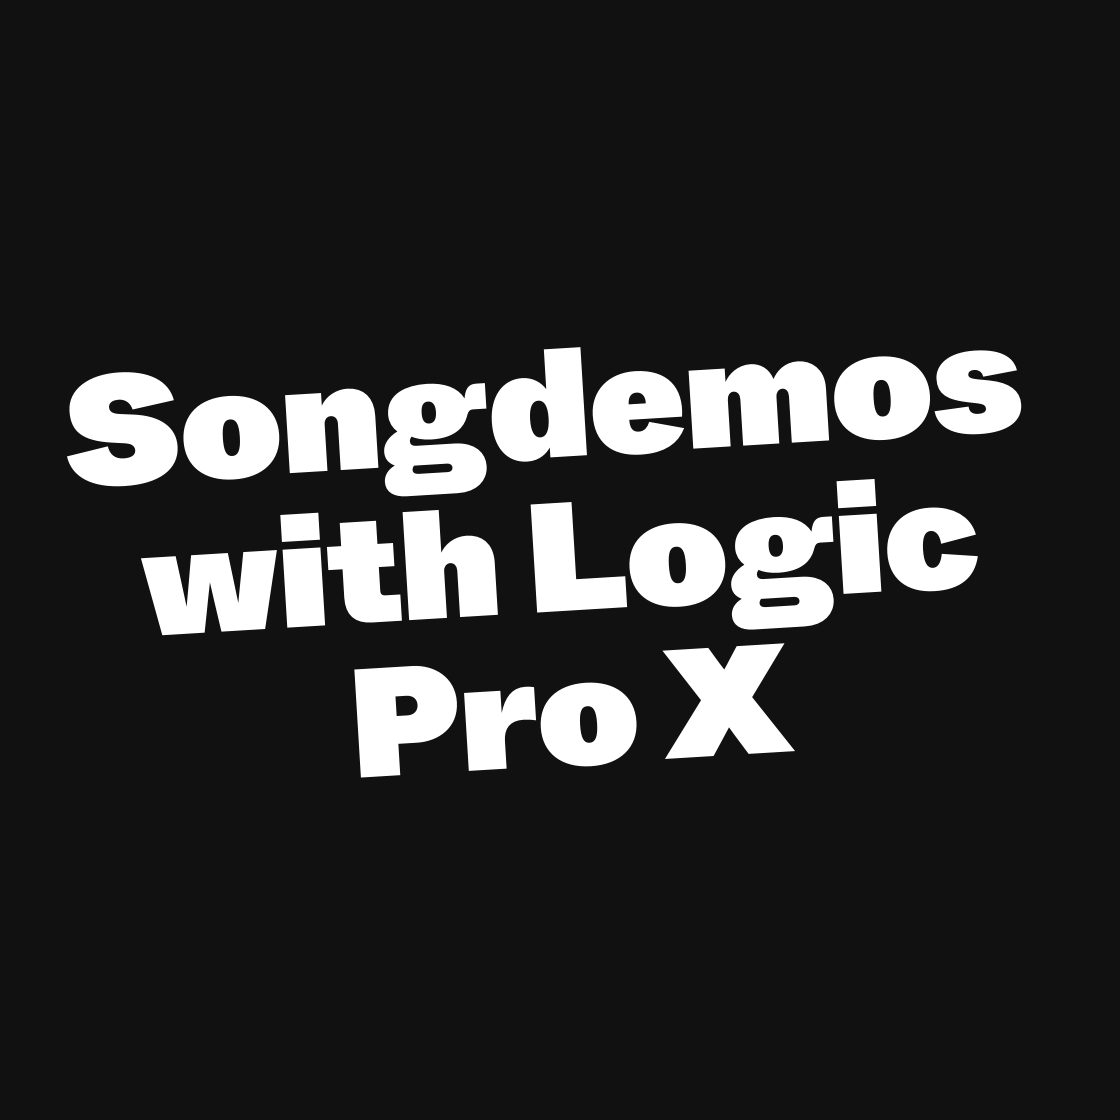 Songdemos with Logic Pro X